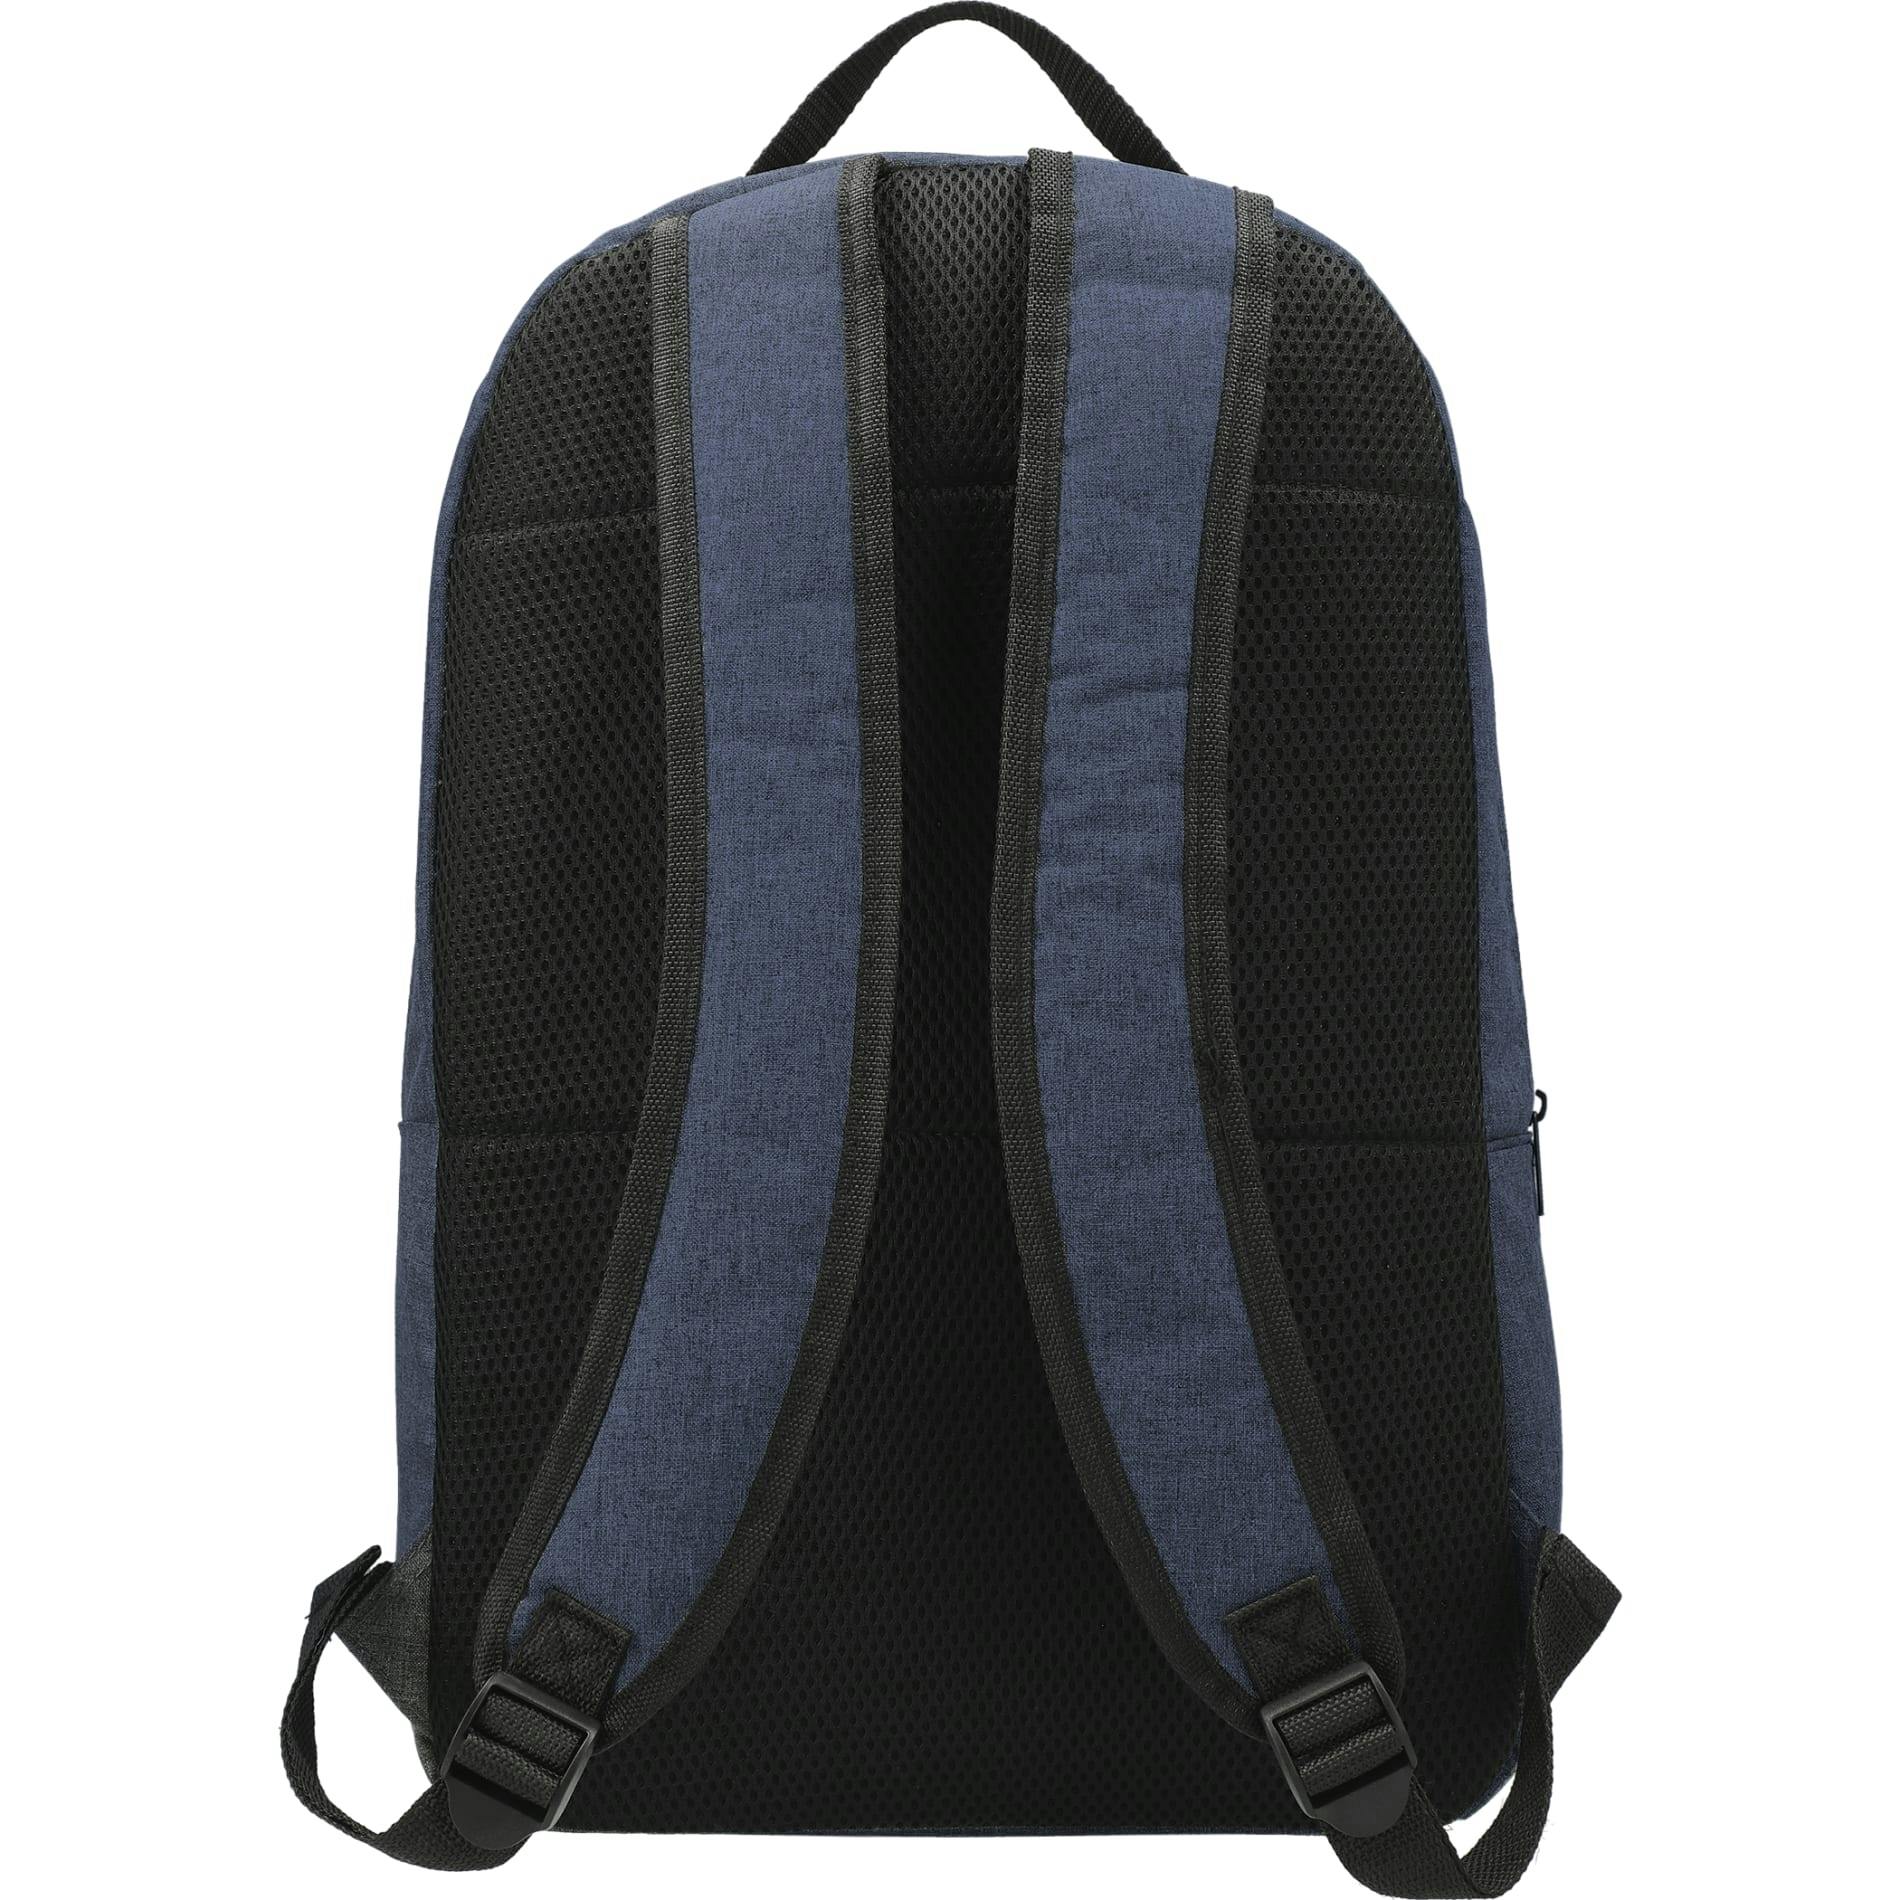 Merchant & Craft Grayley 15" Computer Backpack - additional Image 1